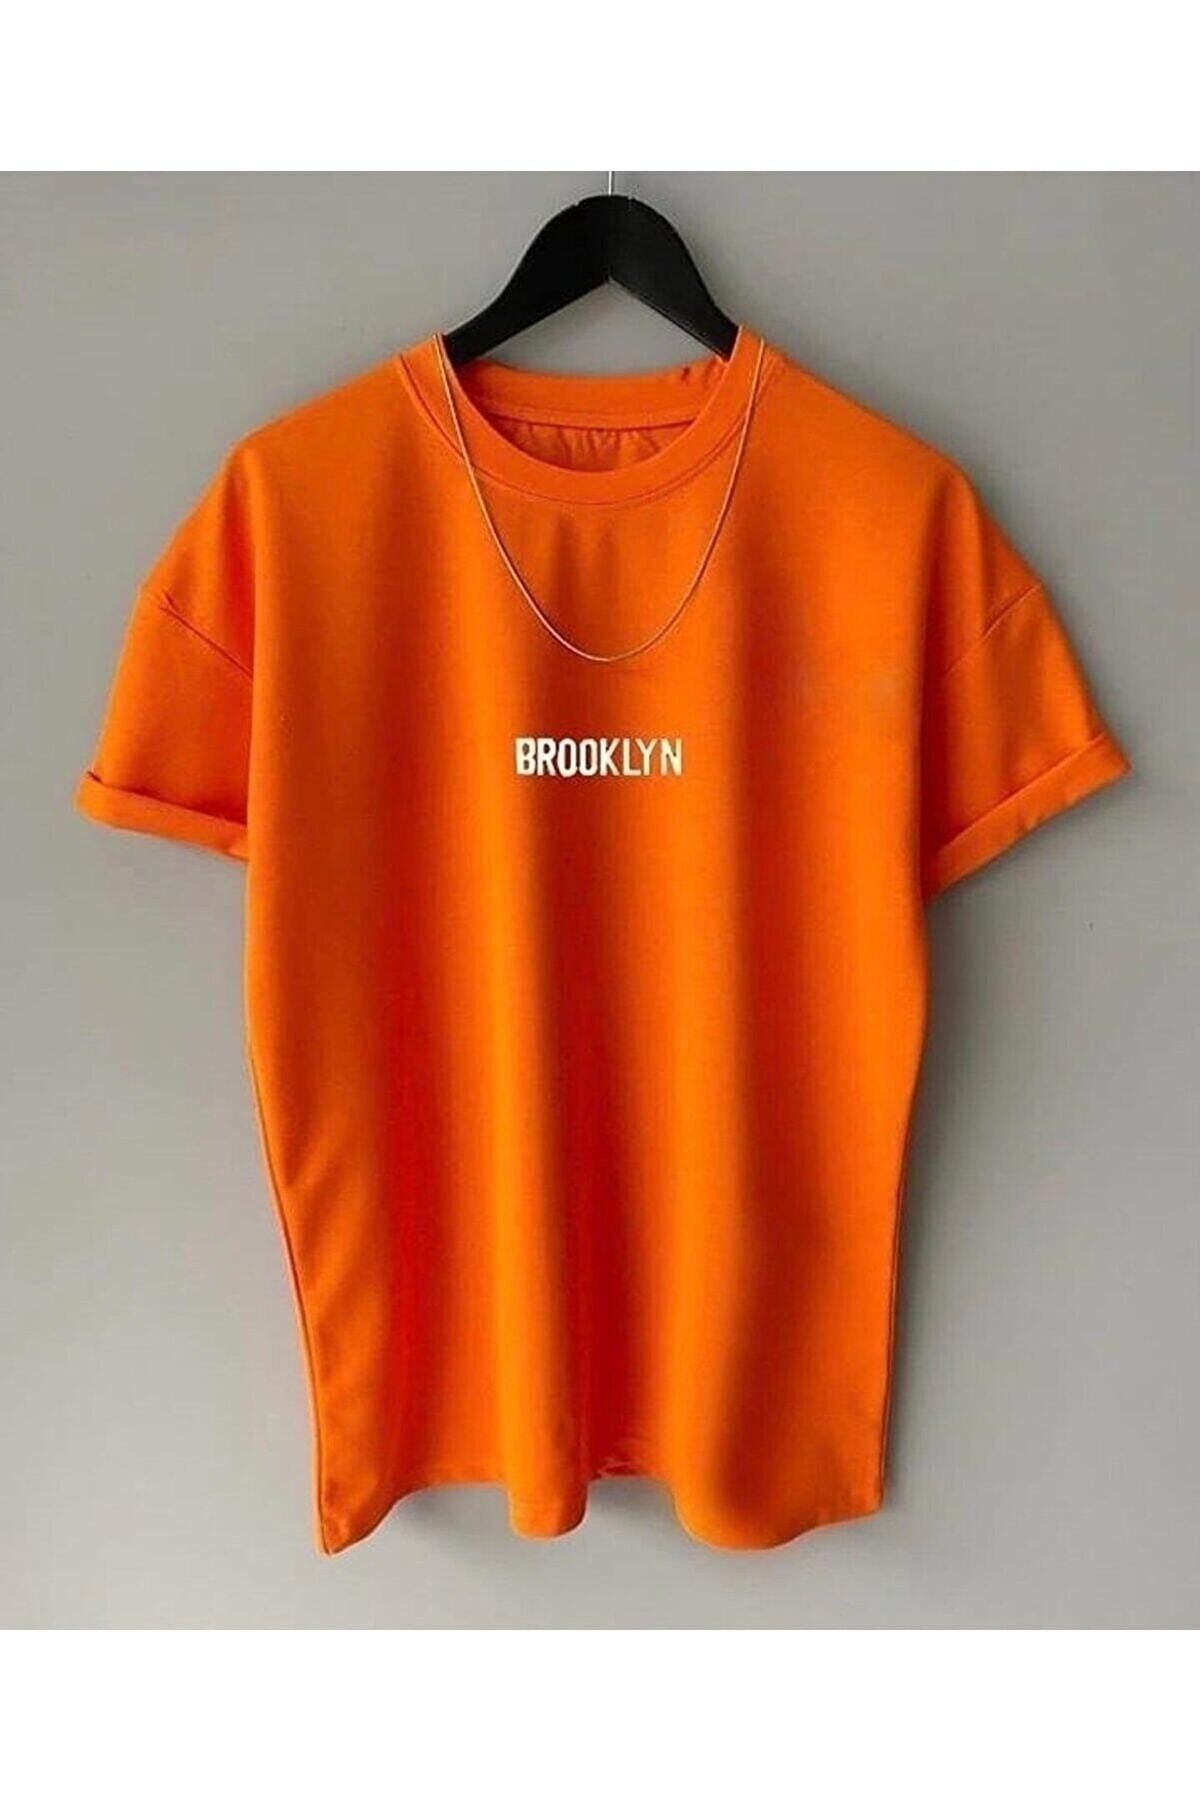 MOONBULL Unisex Oversize Brooklyn Baskılı T-shirt Brooklyn-tshirt